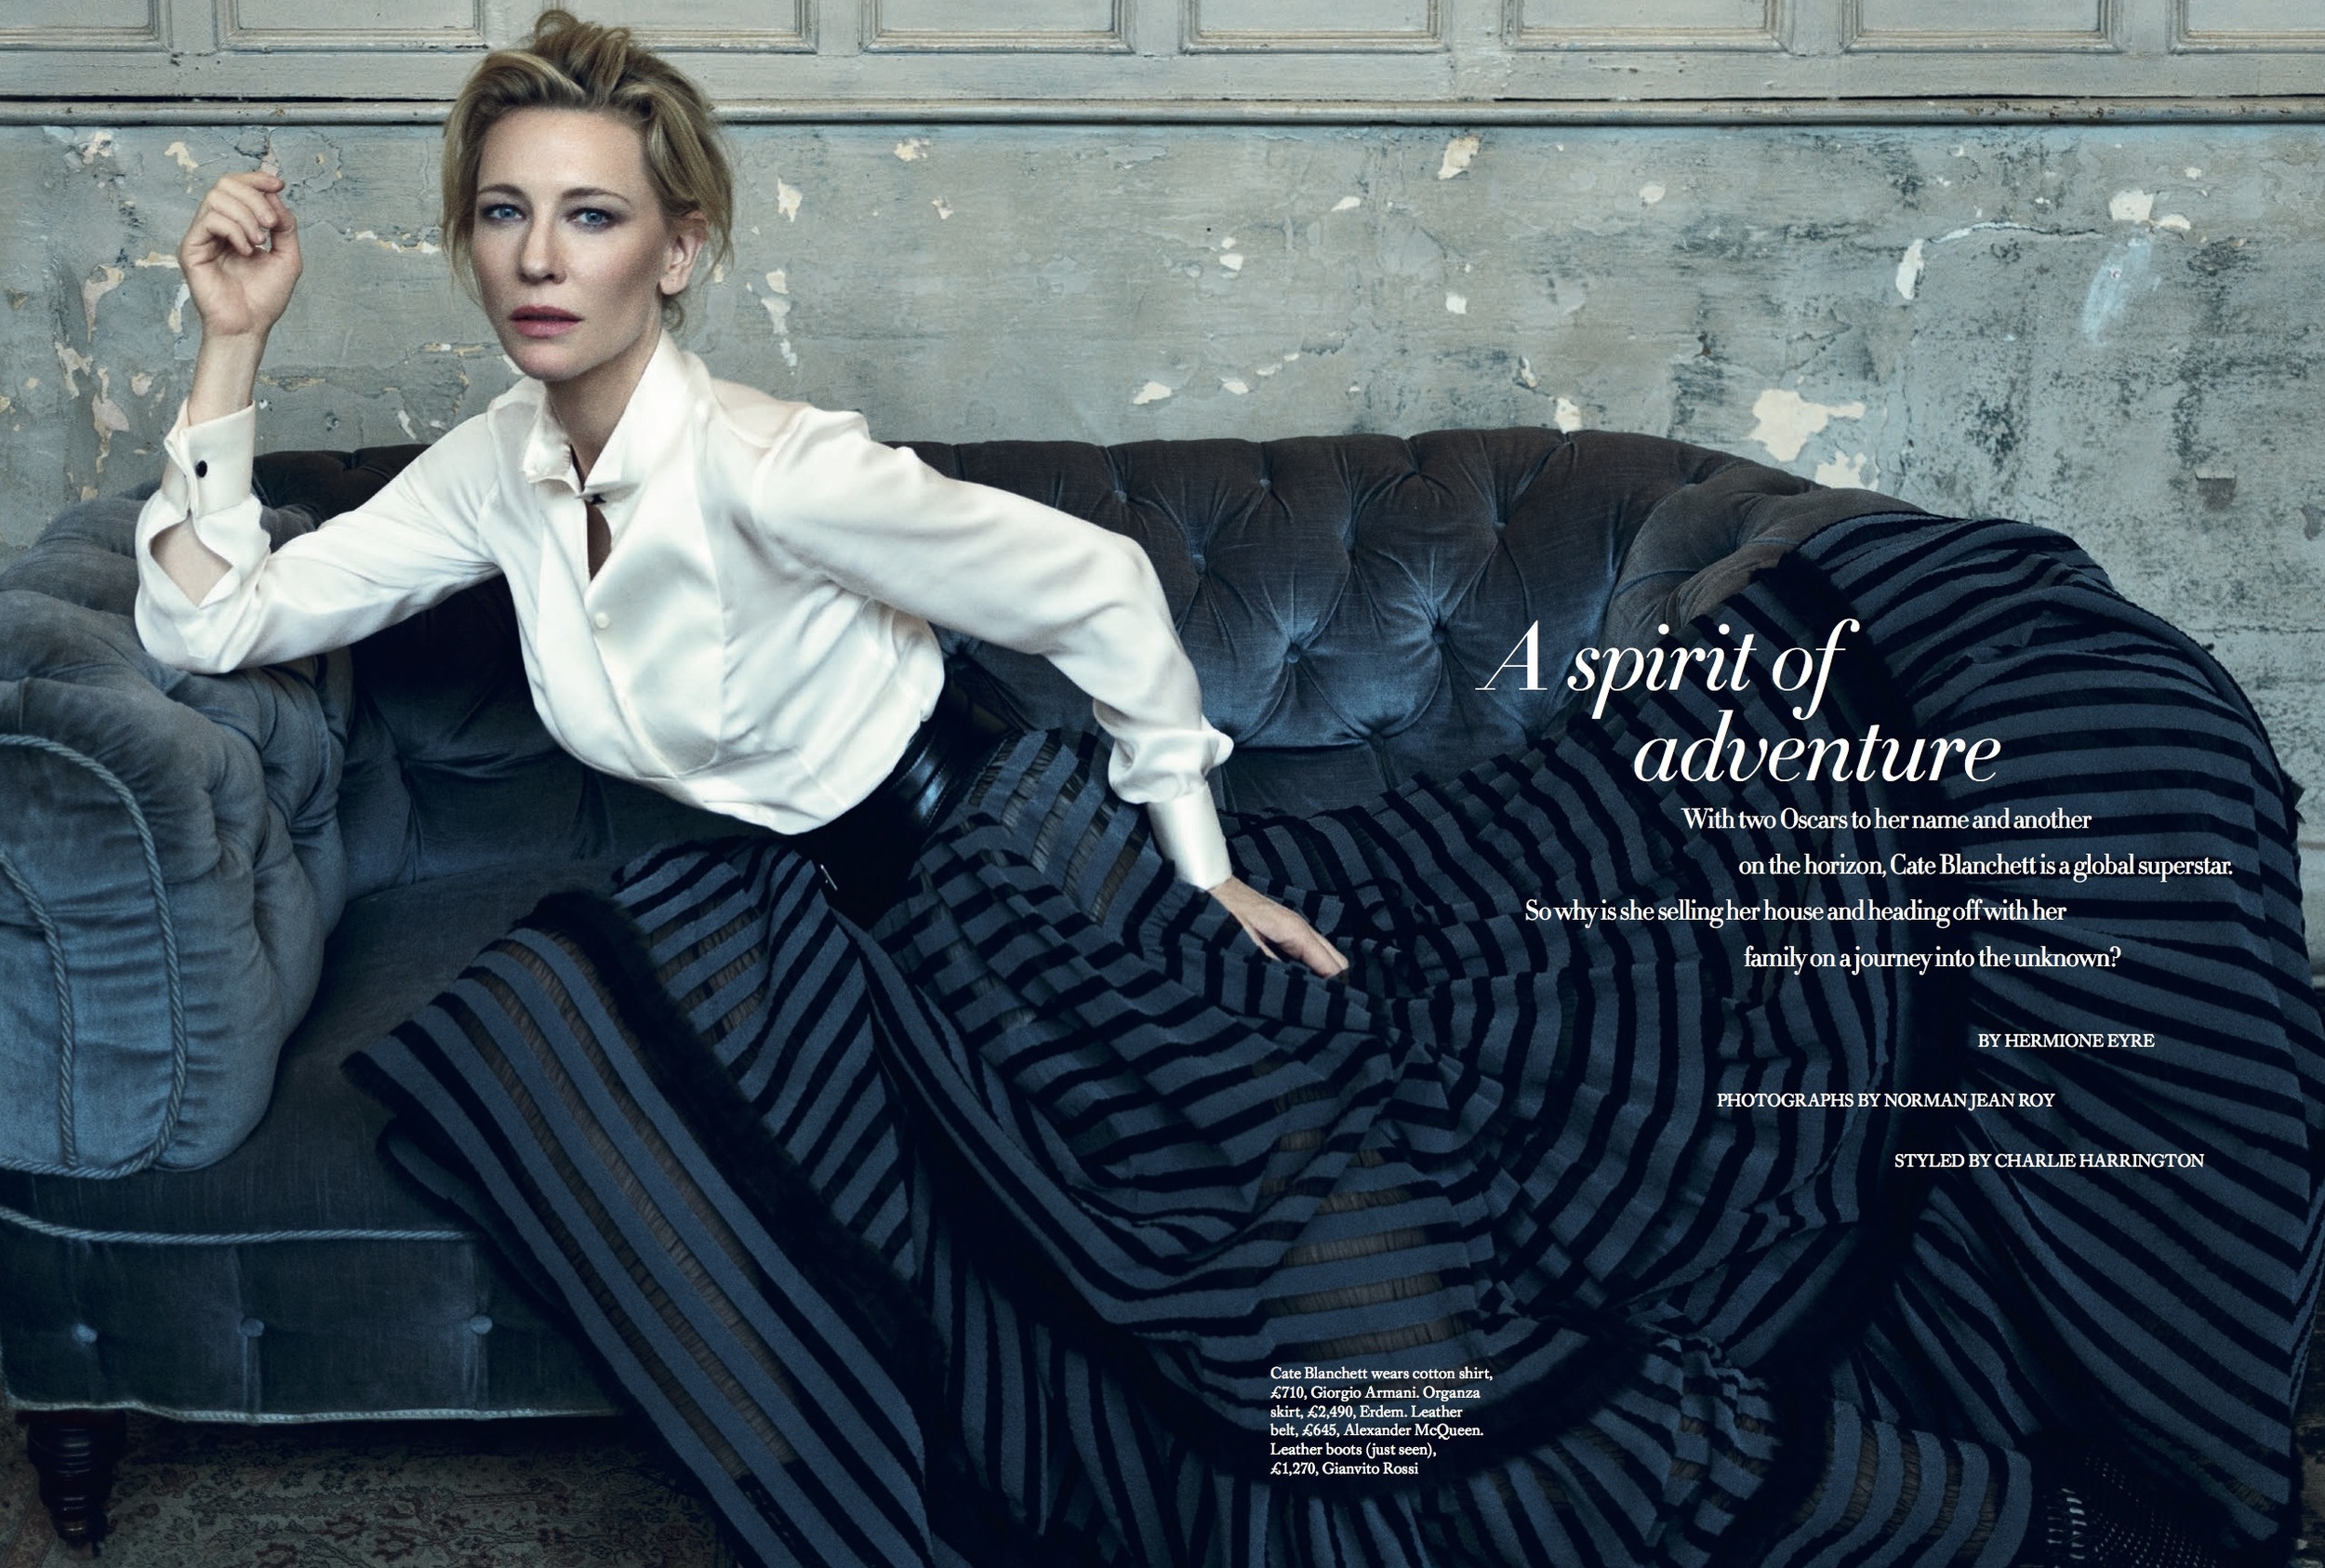 Cate Blanchett Cover Story for Harper's Bazaar, styled by Charlie Harrington. Spread 1. 